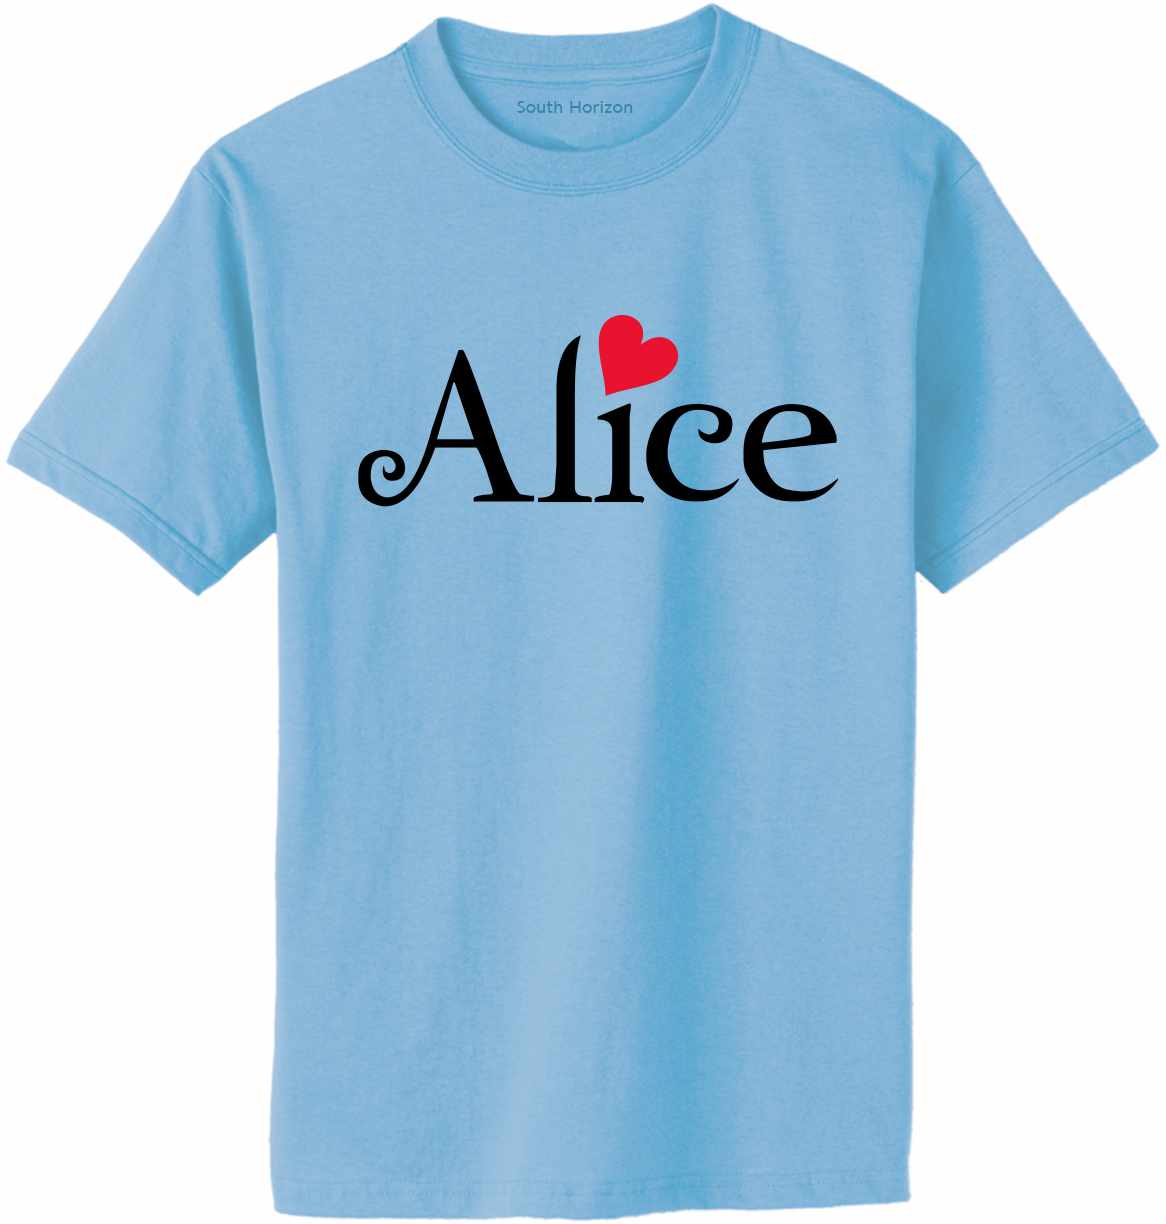 Alice Adult T-Shirt (#531-1)